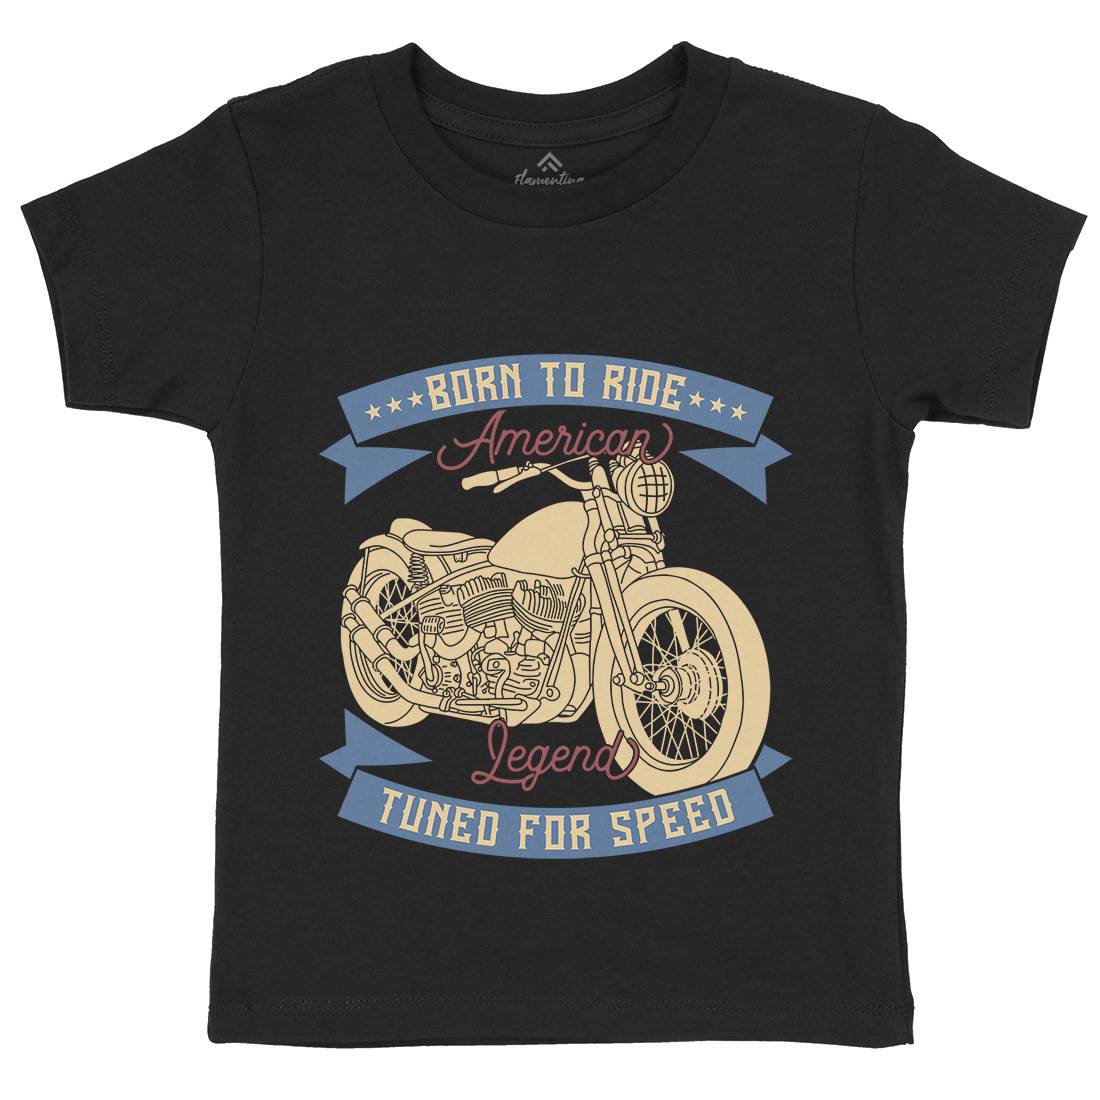 Legend Kids Crew Neck T-Shirt Motorcycles B322